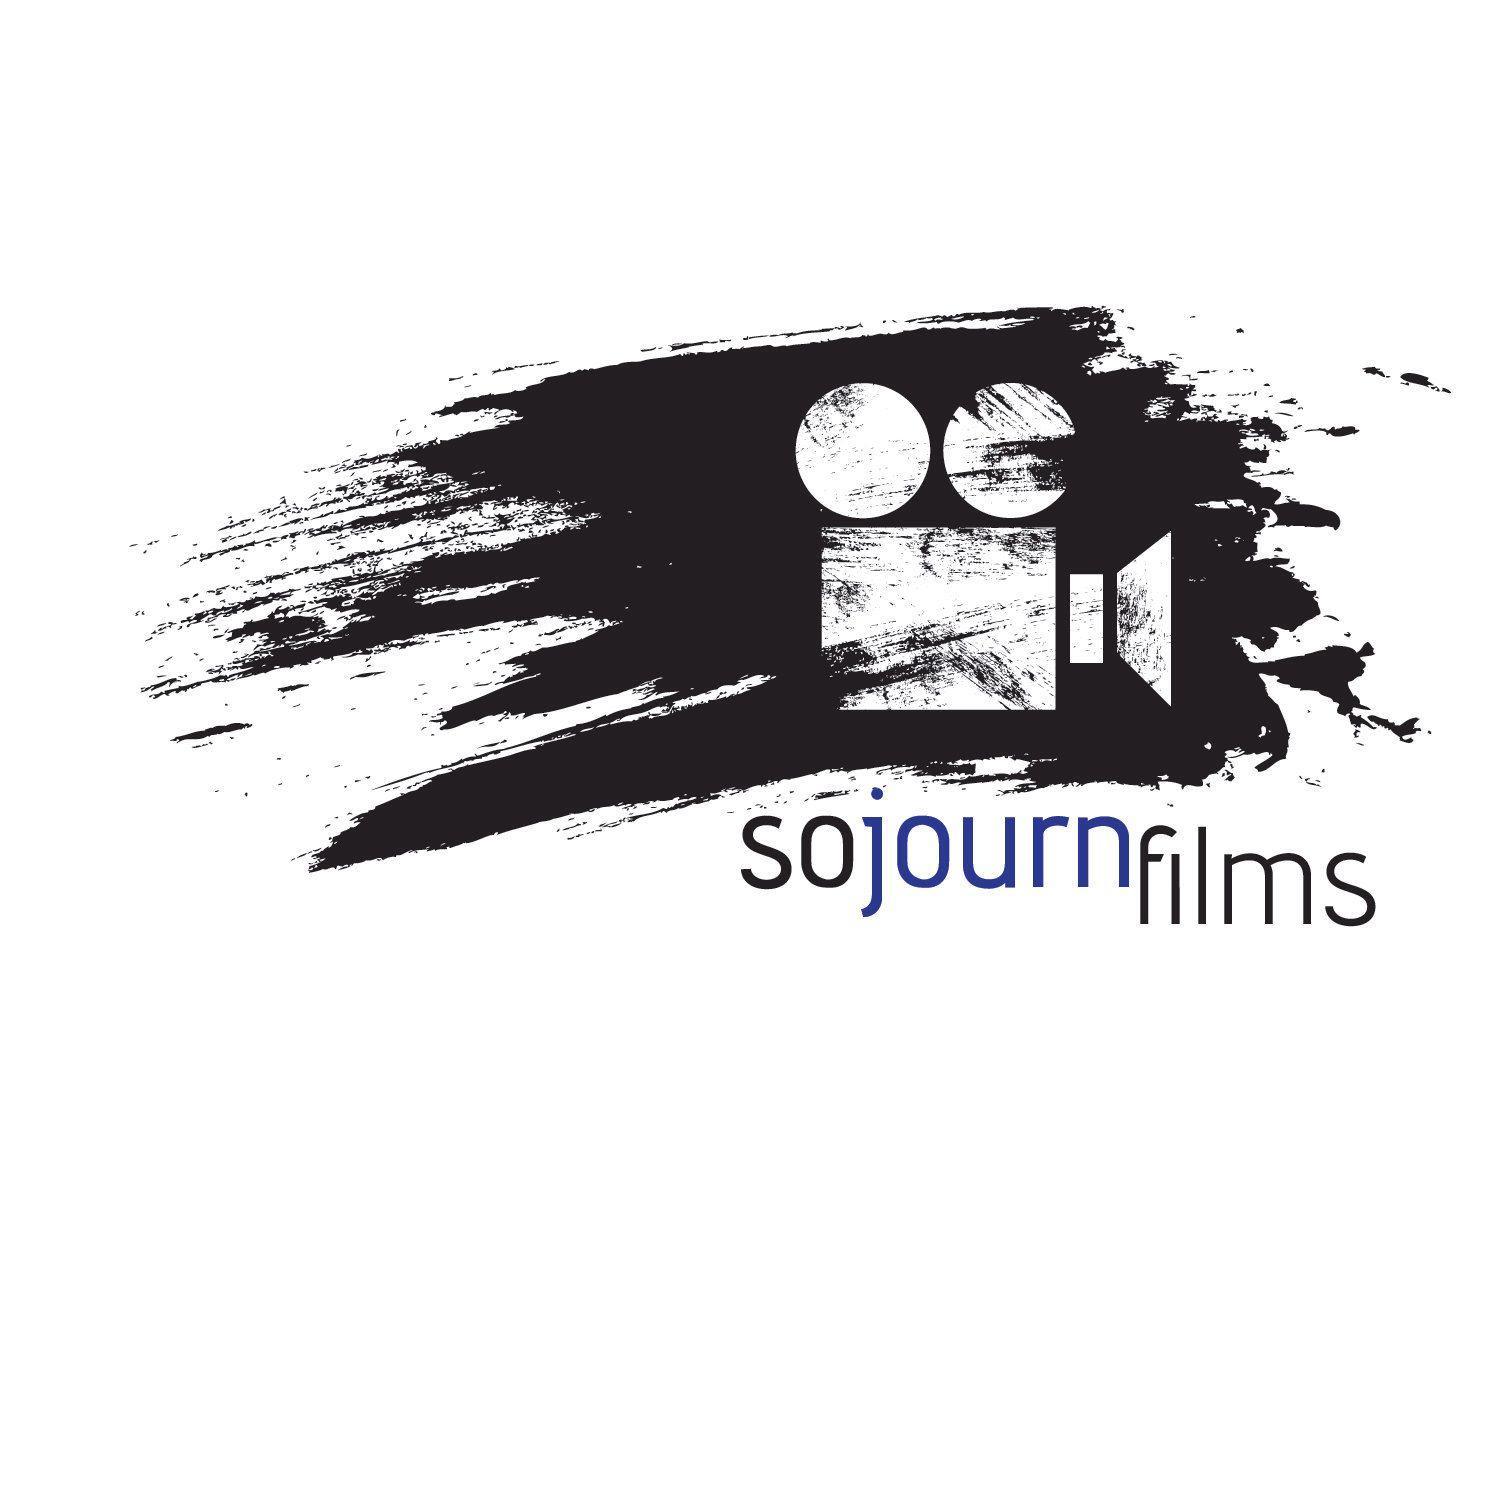 Movie Film Logo - Pin by greg thaler on LOGO | Pinterest | Logos, Film logo and Logo ...